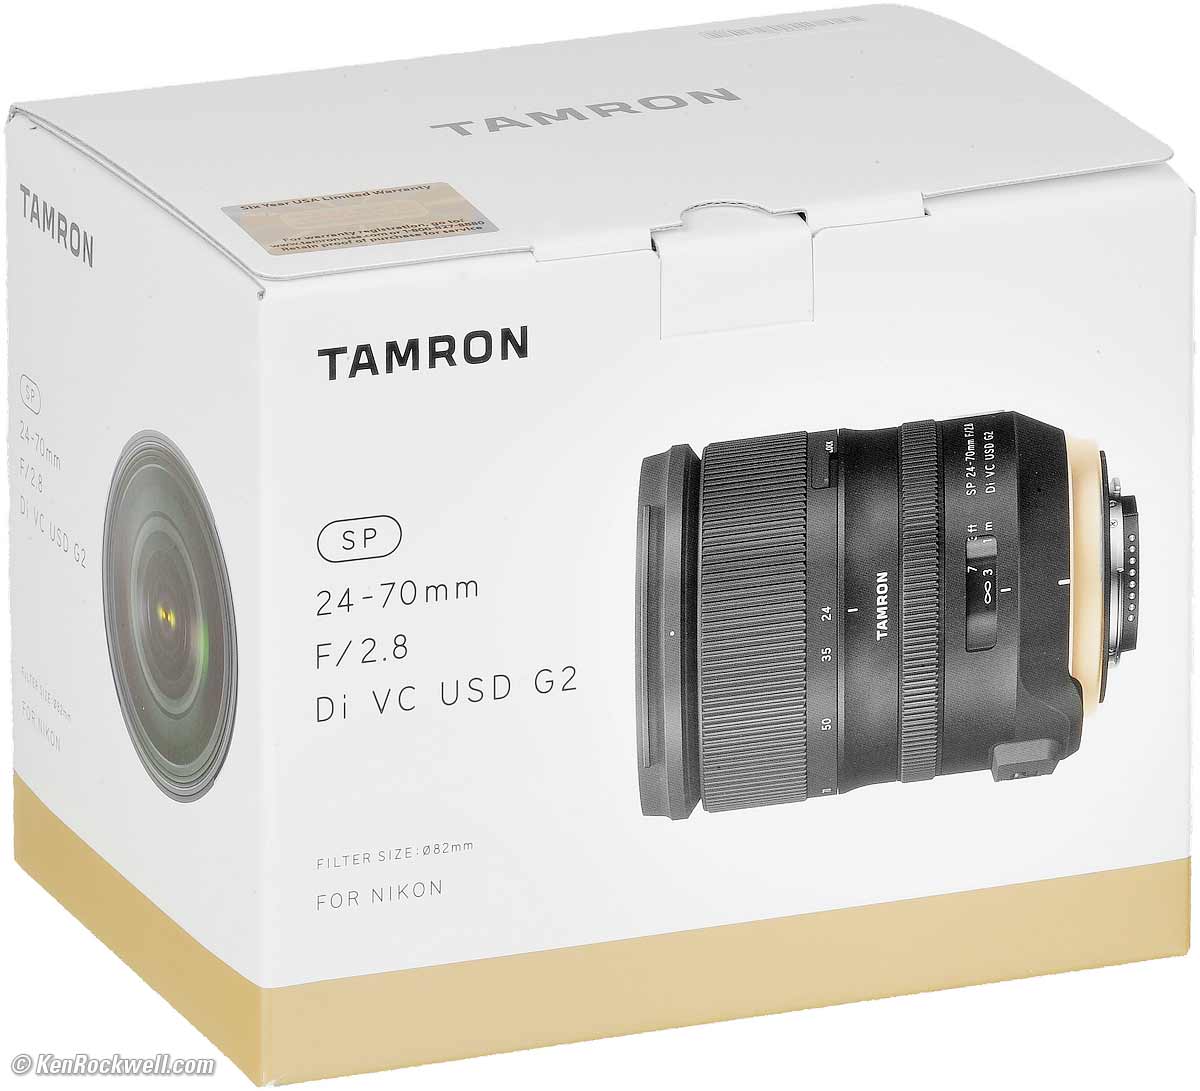 TAMRON SP24-70mm F2.8 Di VC USD G2 A032N for Nikon International Version - No Warranty 